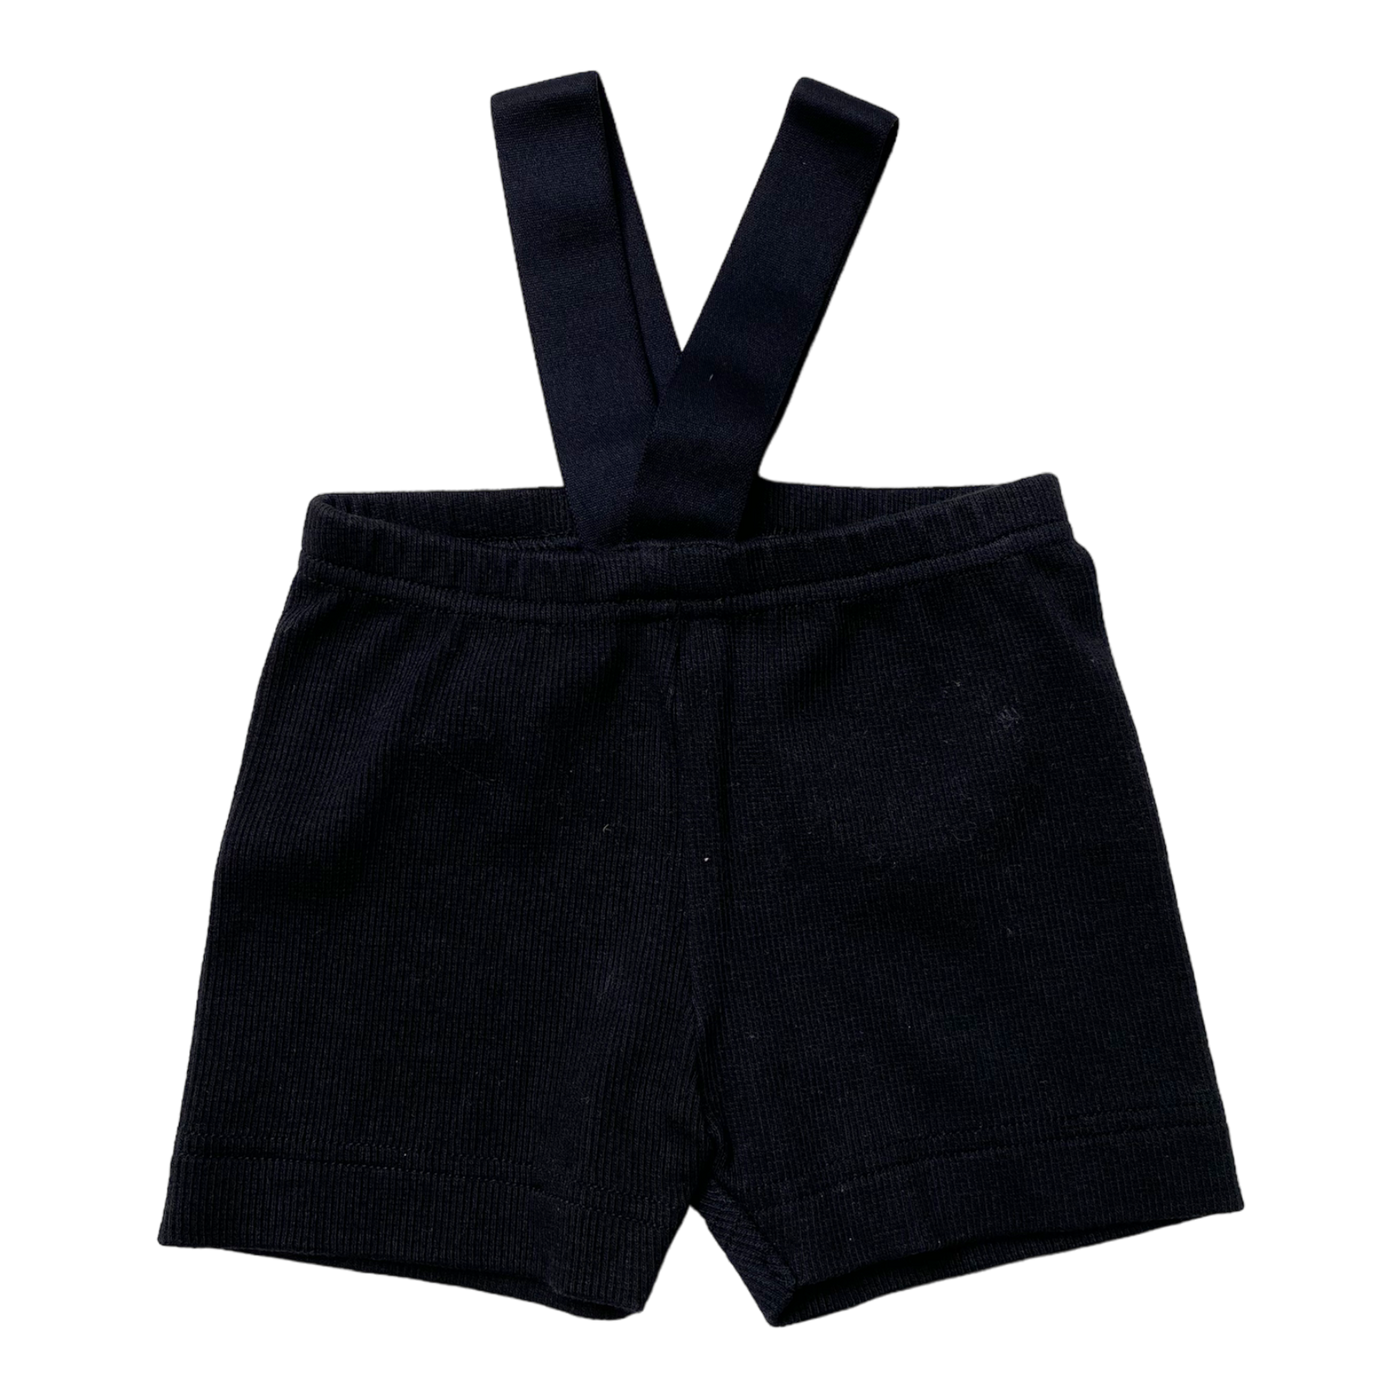 Metsola rib brace shorts, black | 50/56cm